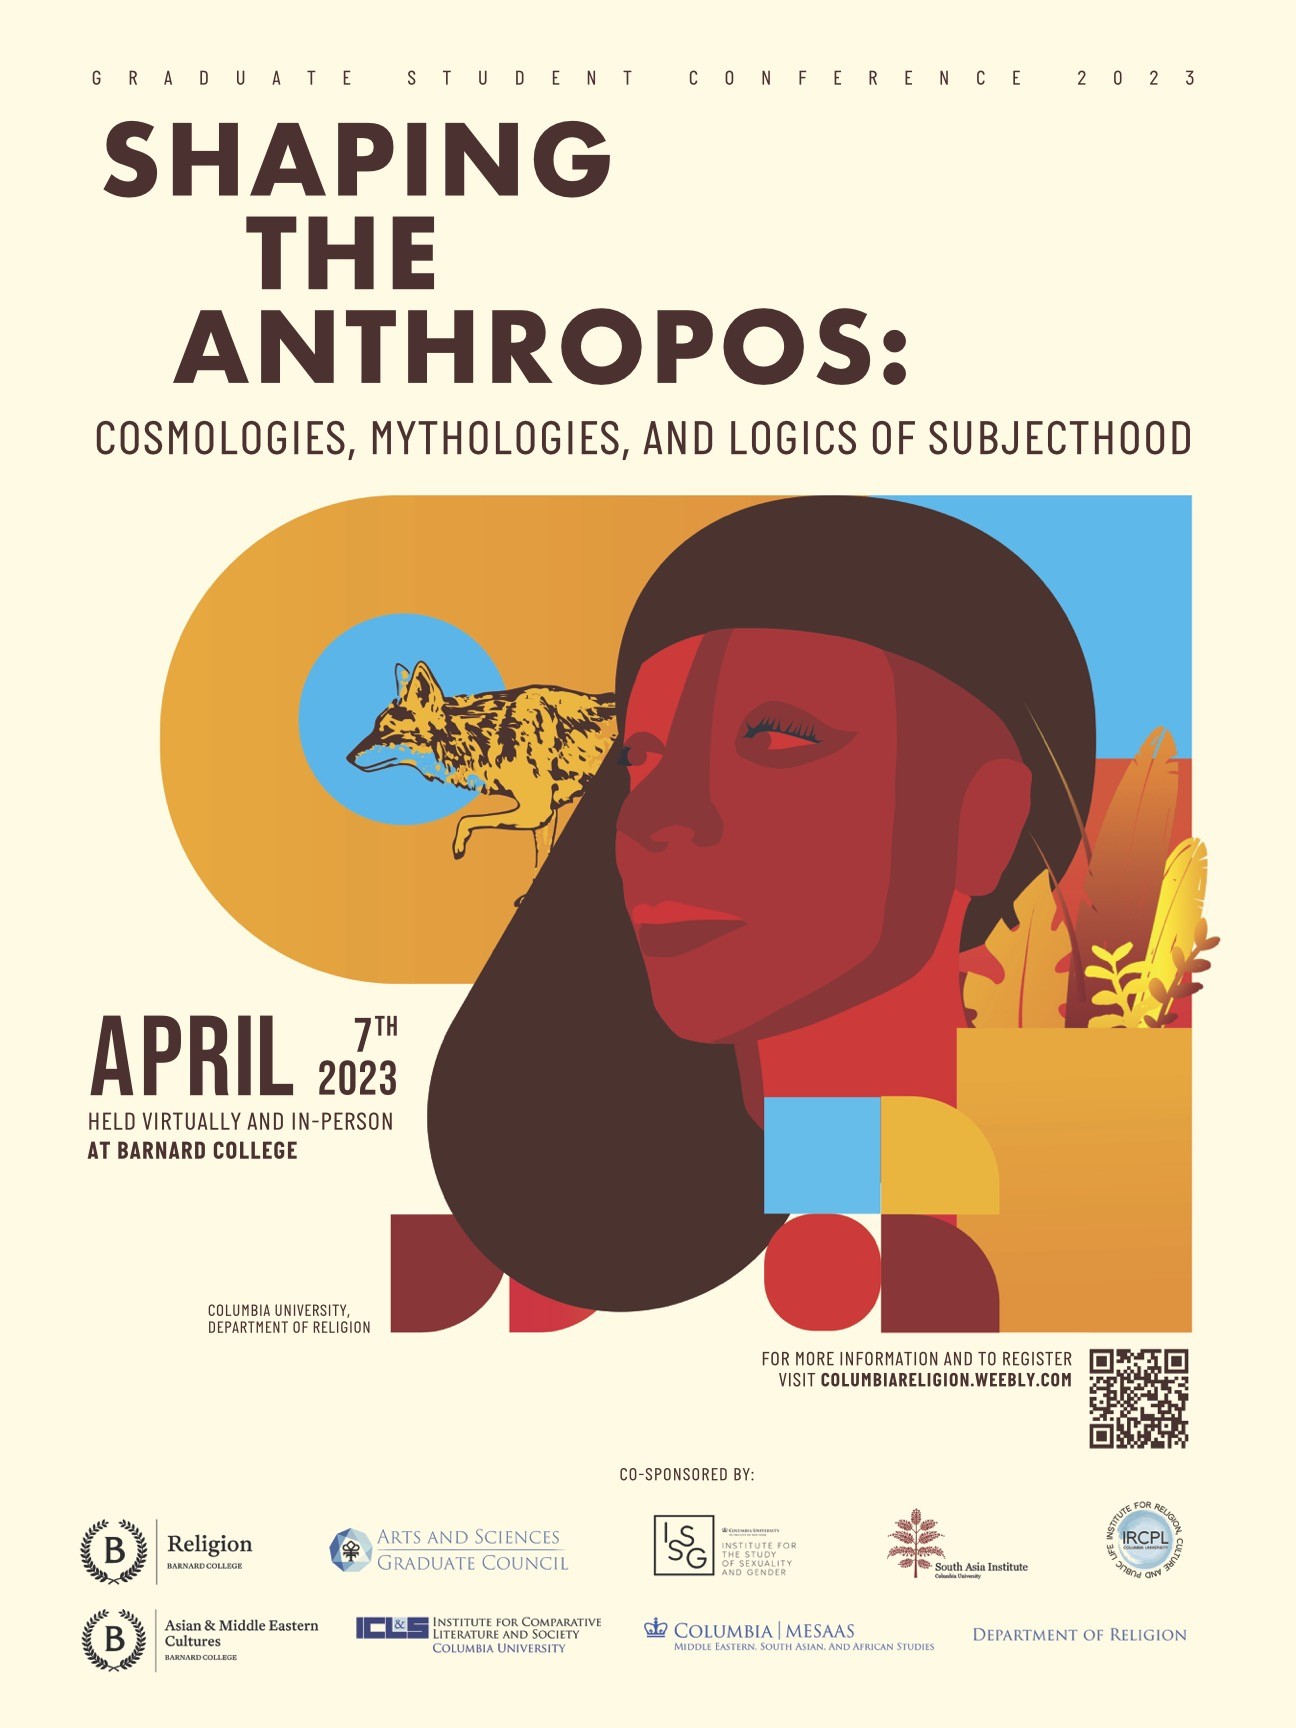 Shaping the Anthropos: Cosmologies, Mythologies and Logics of Subjecthood